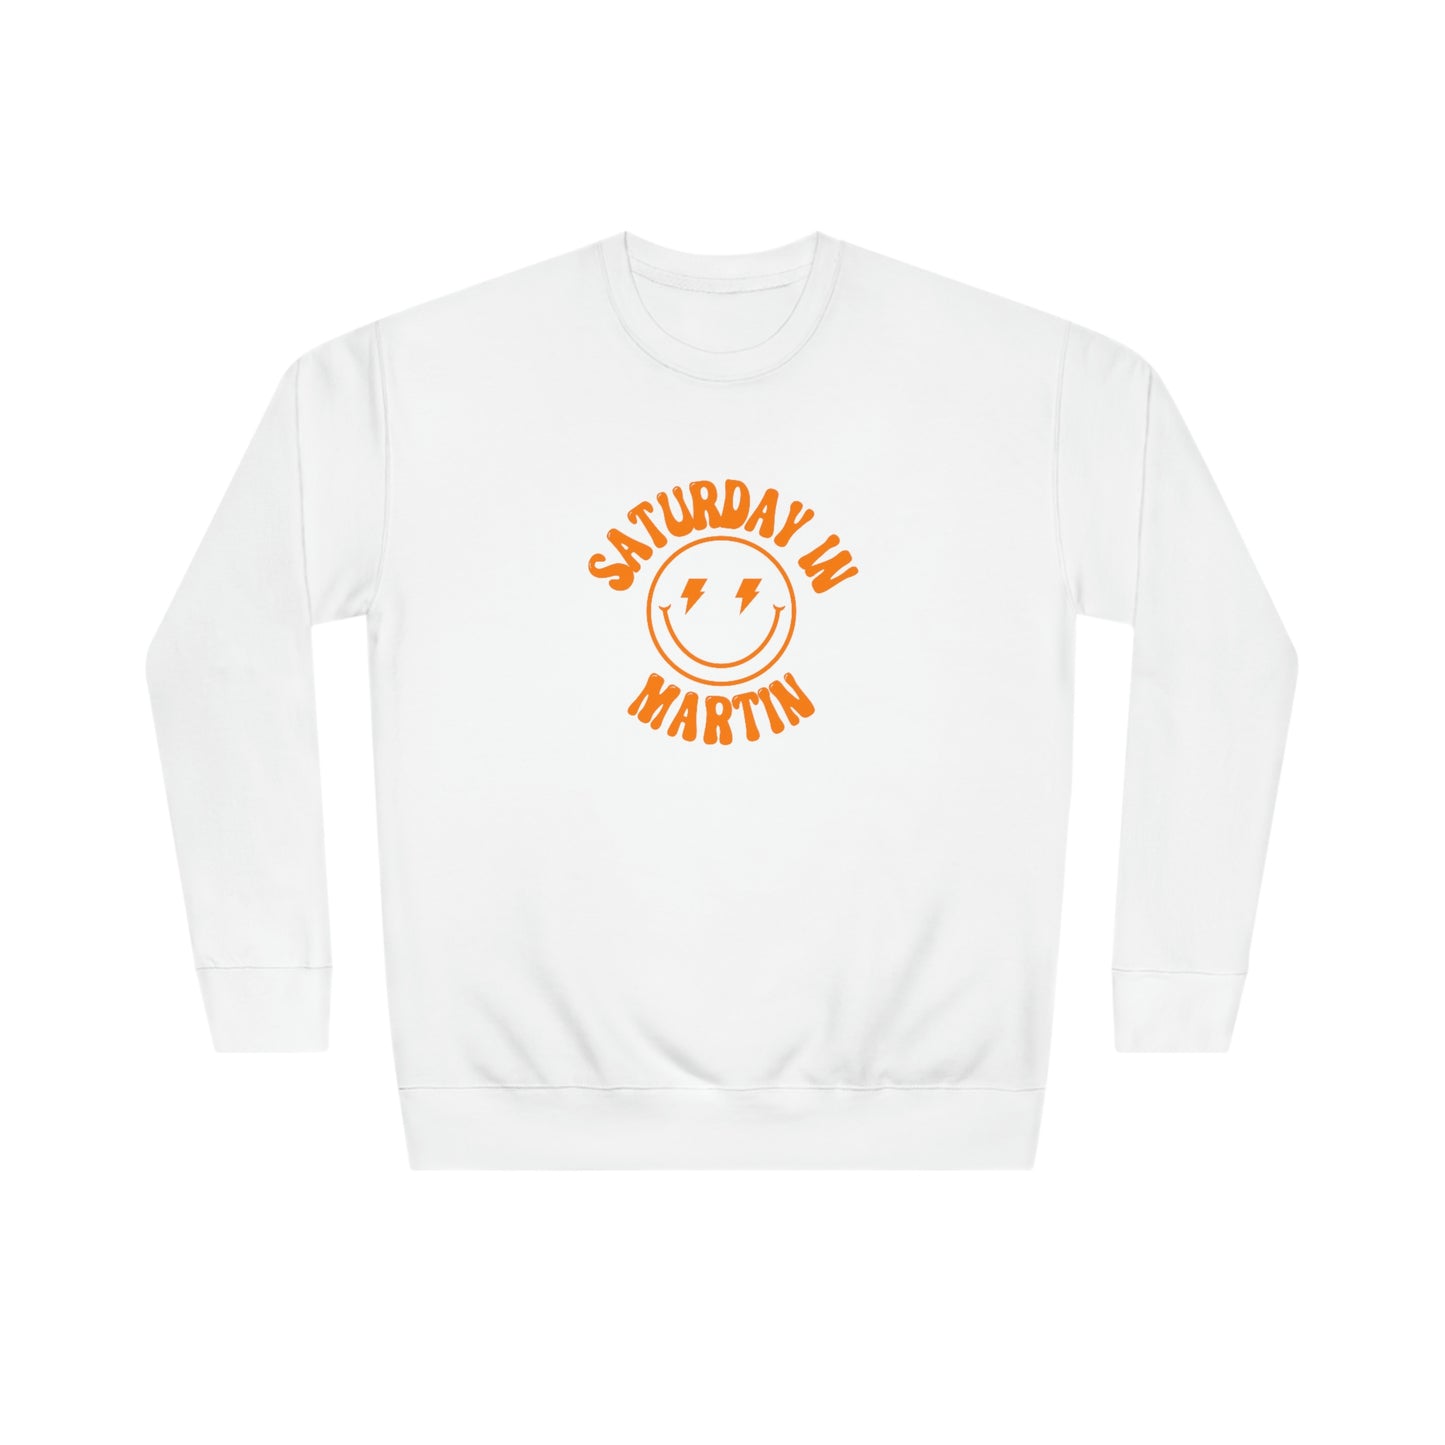 Smiley Martin Crew Sweatshirt - GG